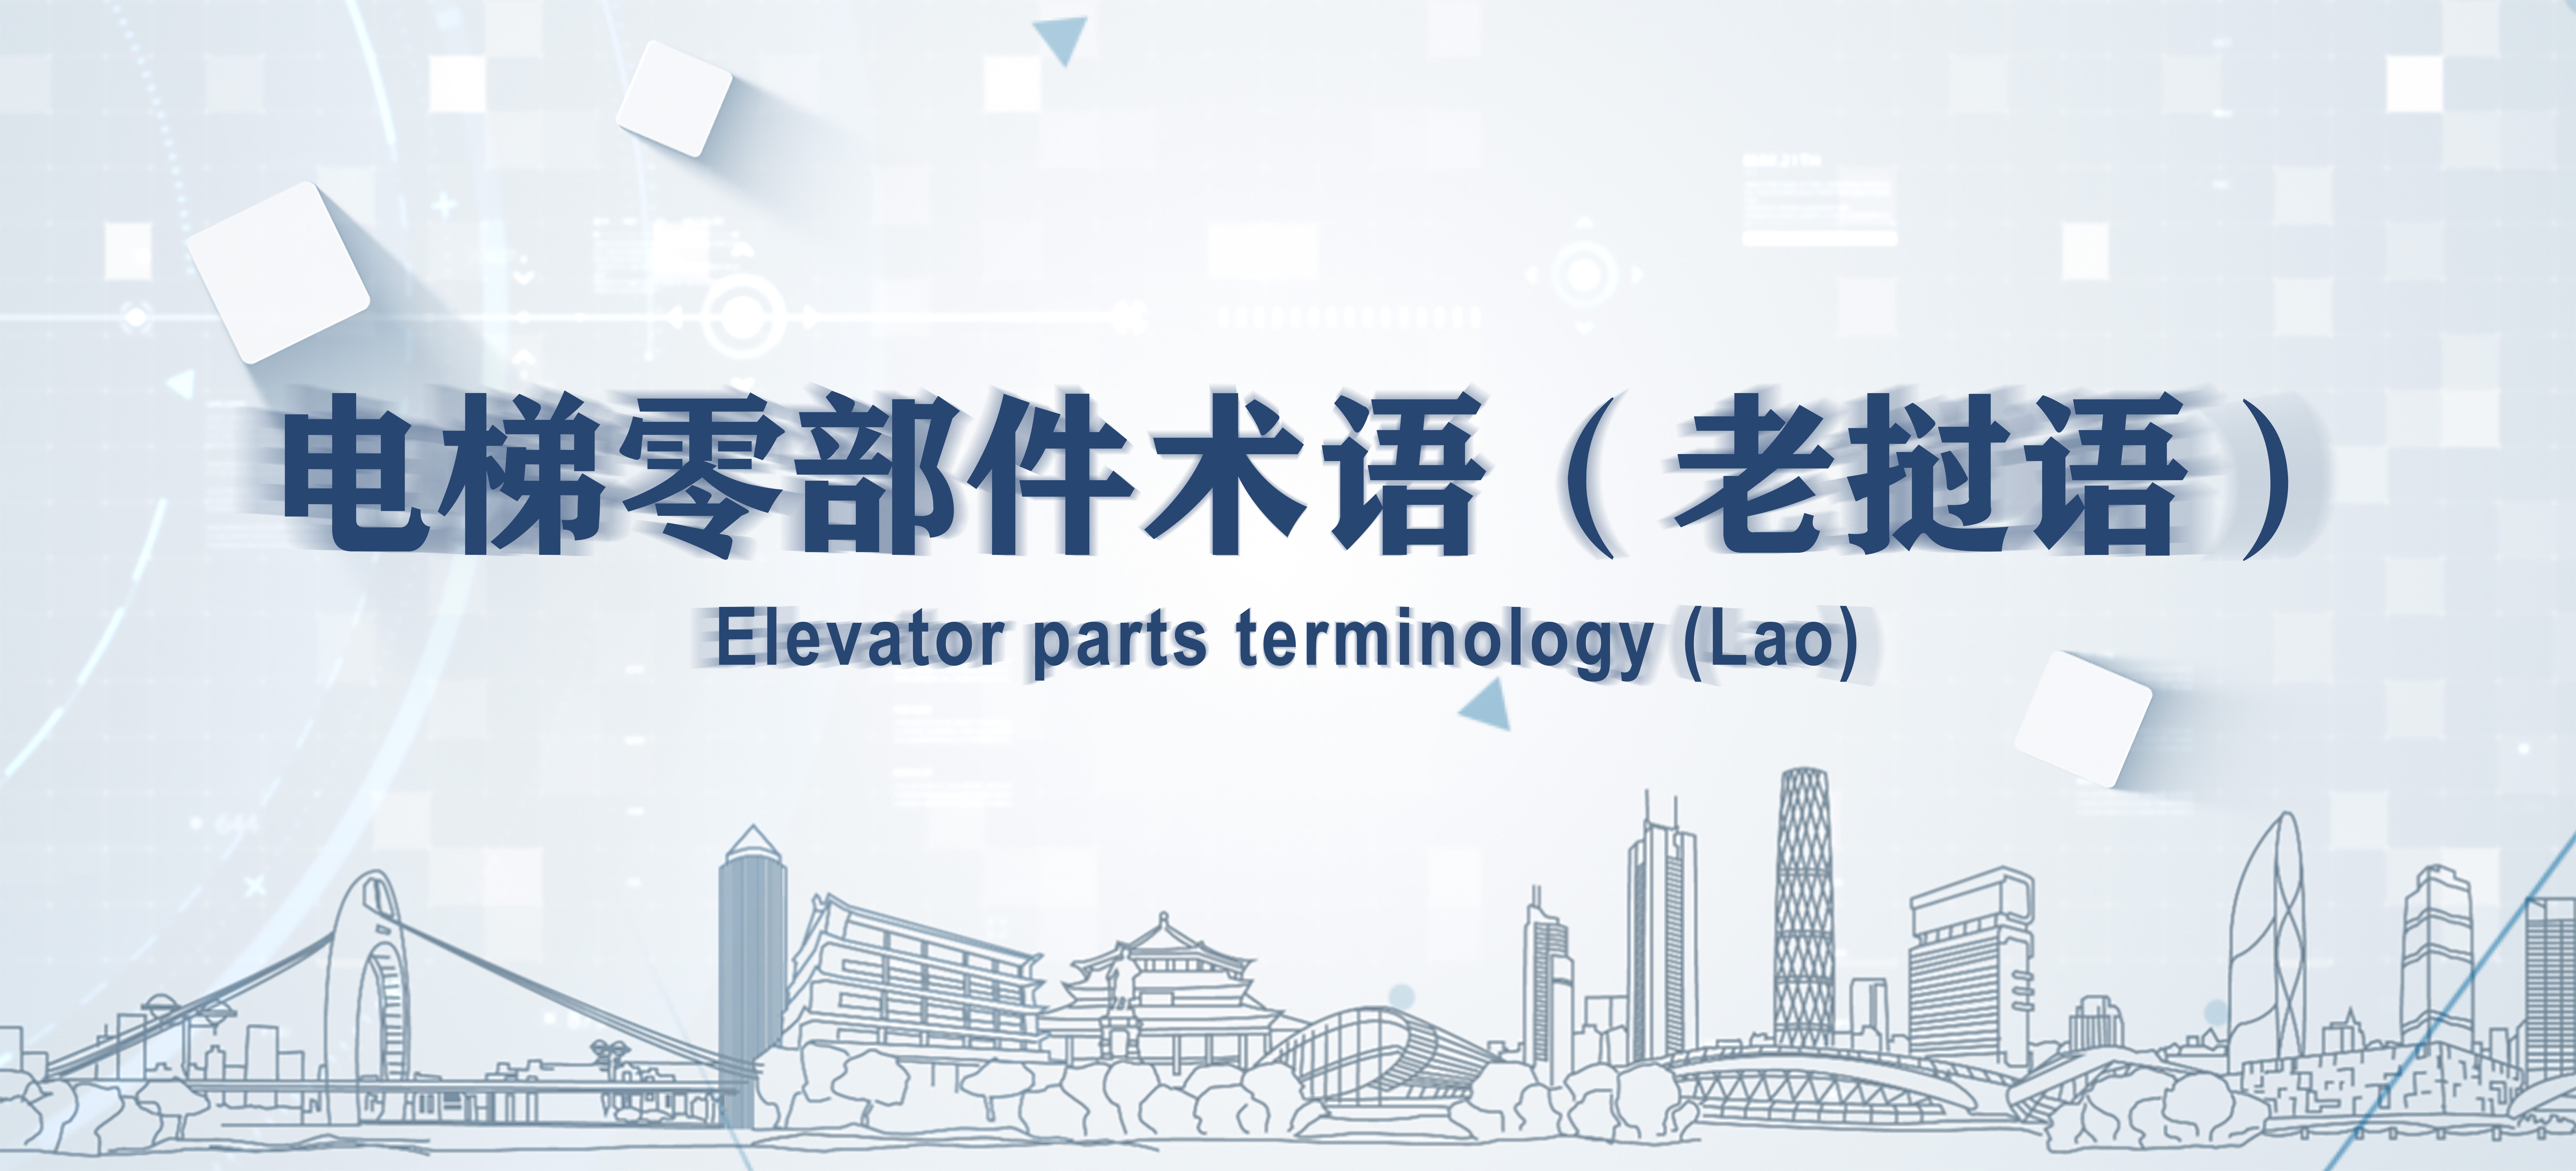 Elevator parts terminology (Lao)